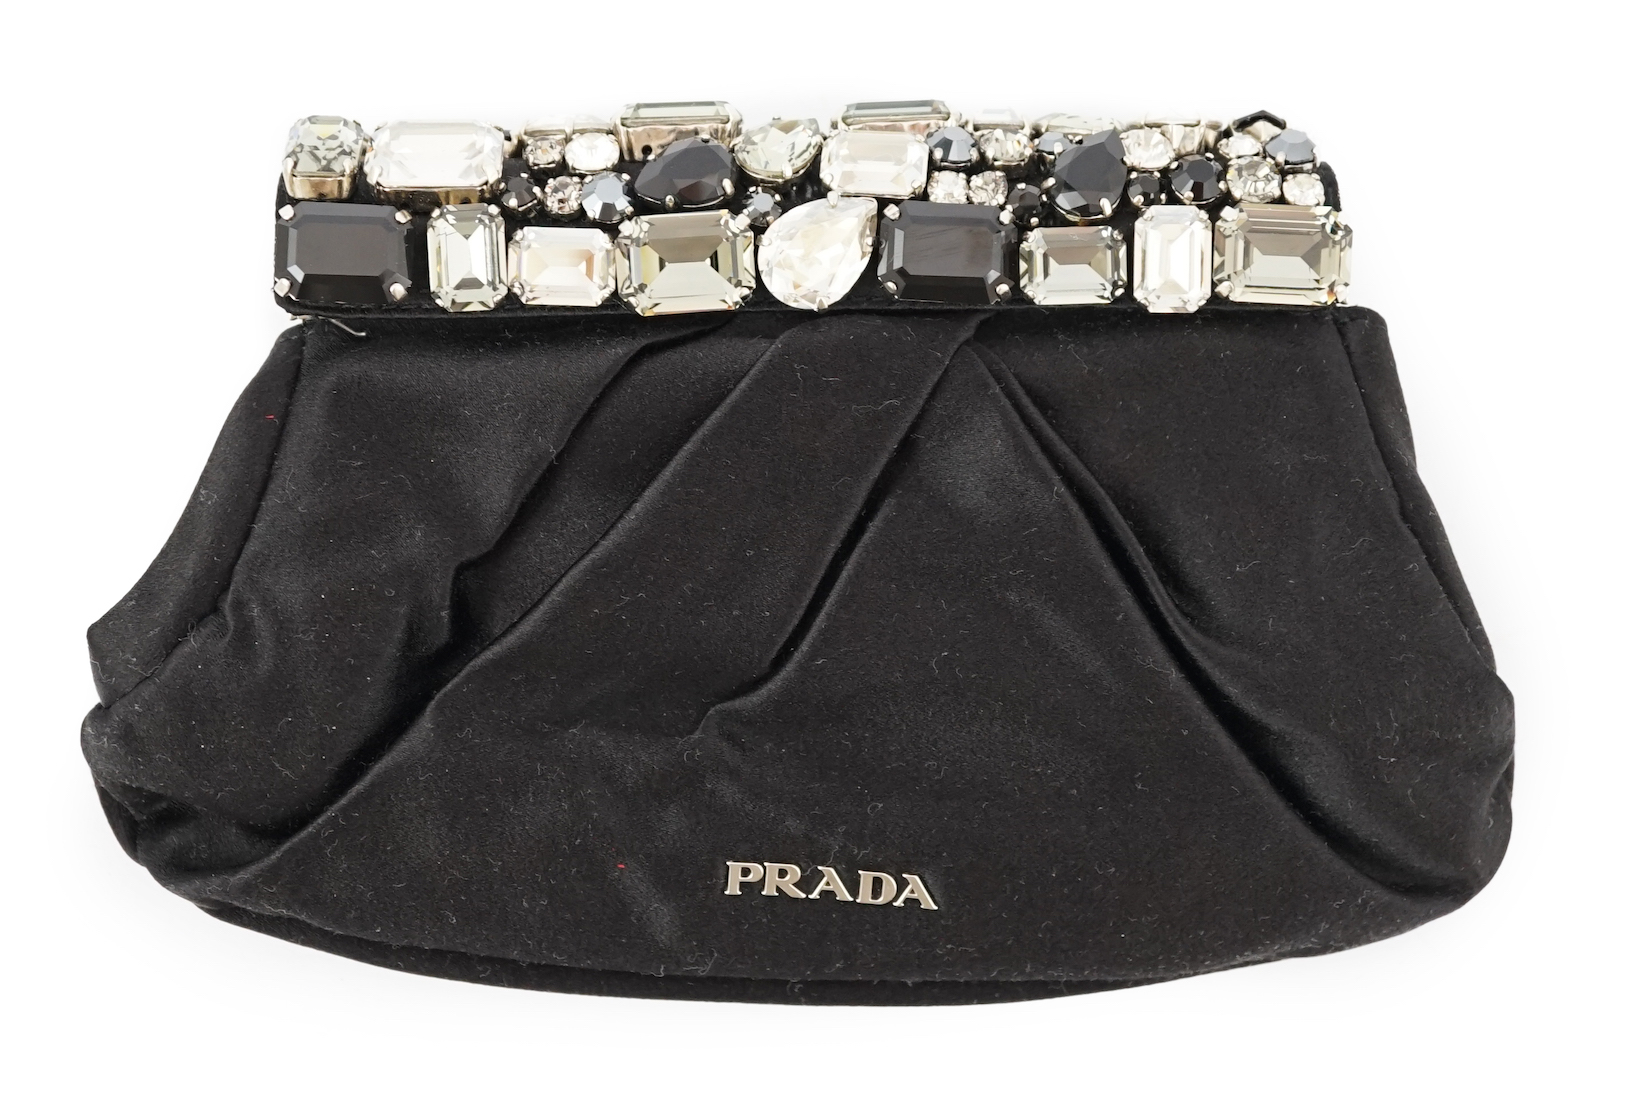 A Prada Raso Stones Nero black satin clutch bag height 12cm, width 19.5cm, depth 4cm